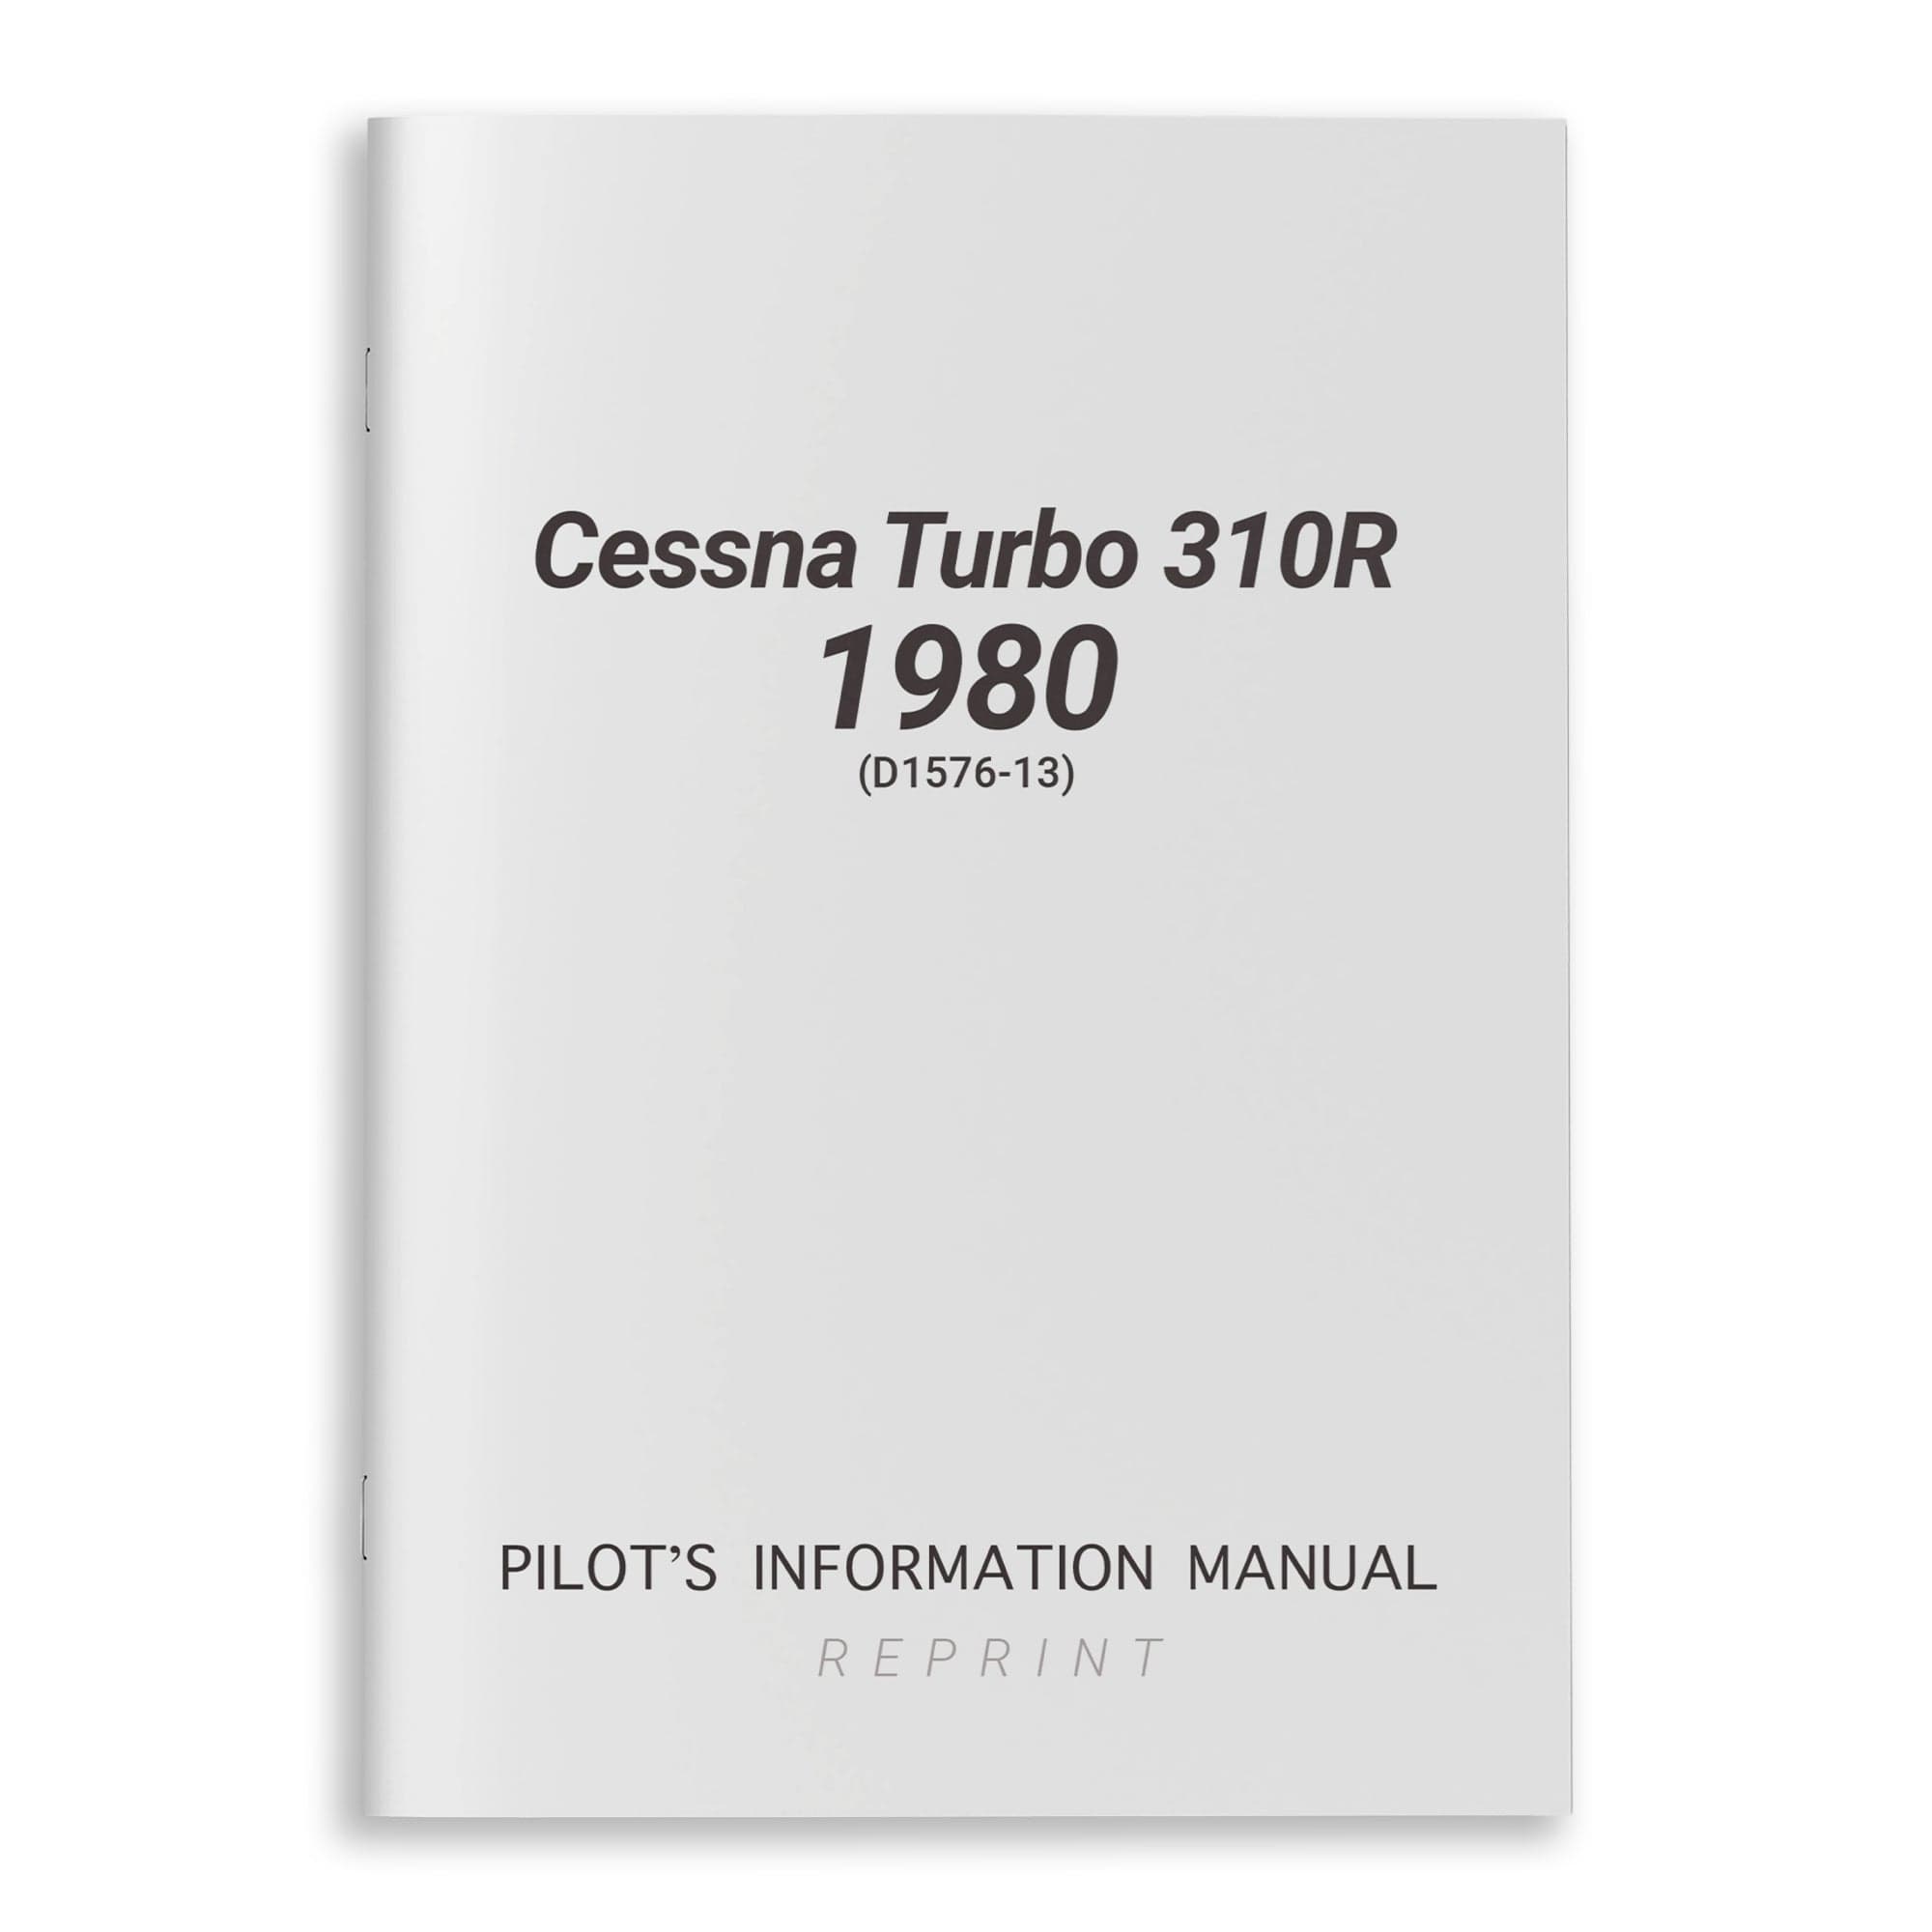 Cessna Turbo 310R 1980 Pilot's Information Manual (D1576-13)